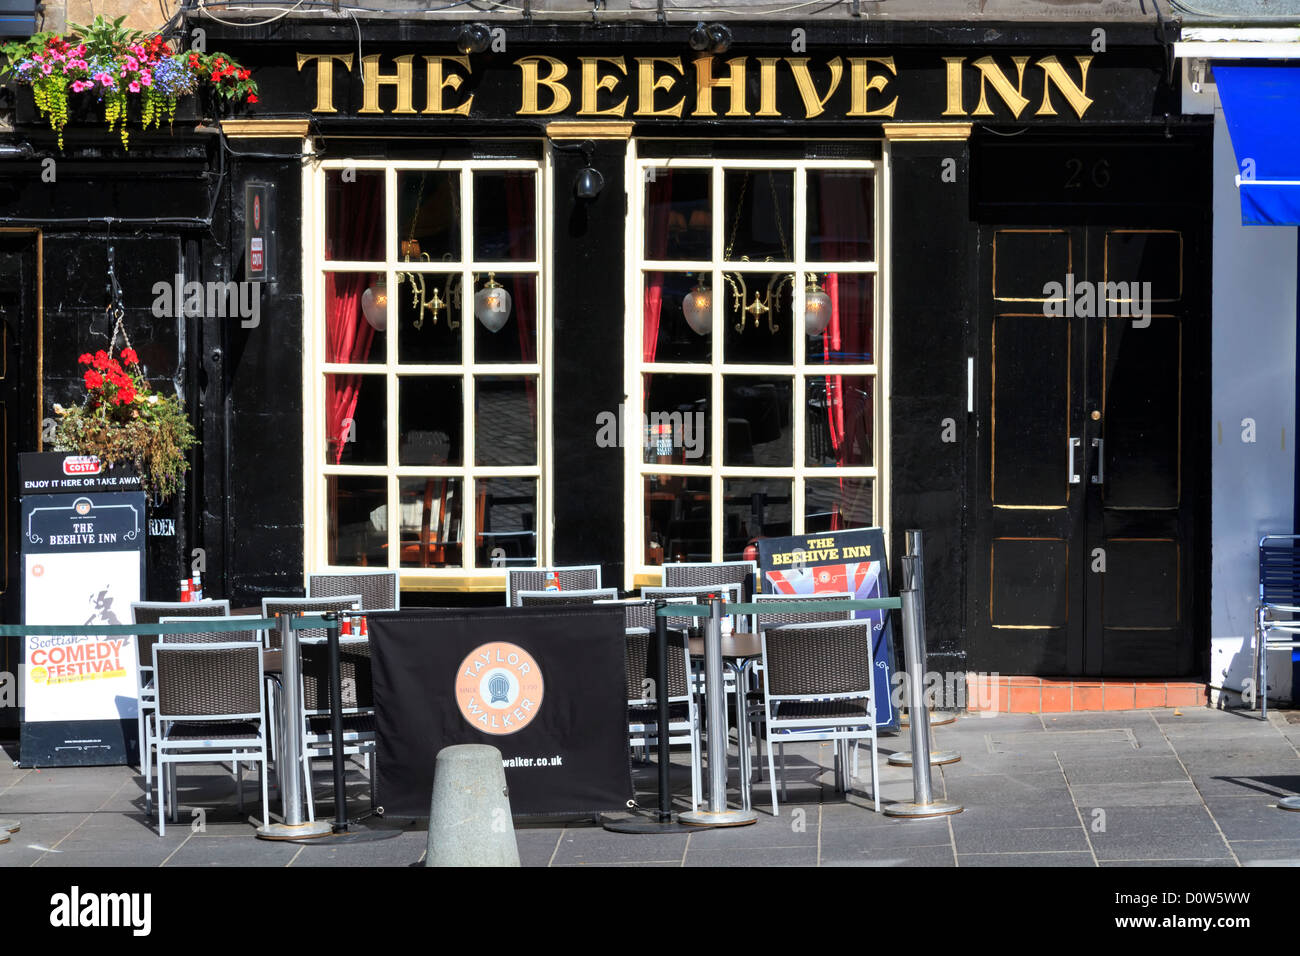 The Beehive Inn, Grassmarket, Edinburgh, Scotland Stock Photo